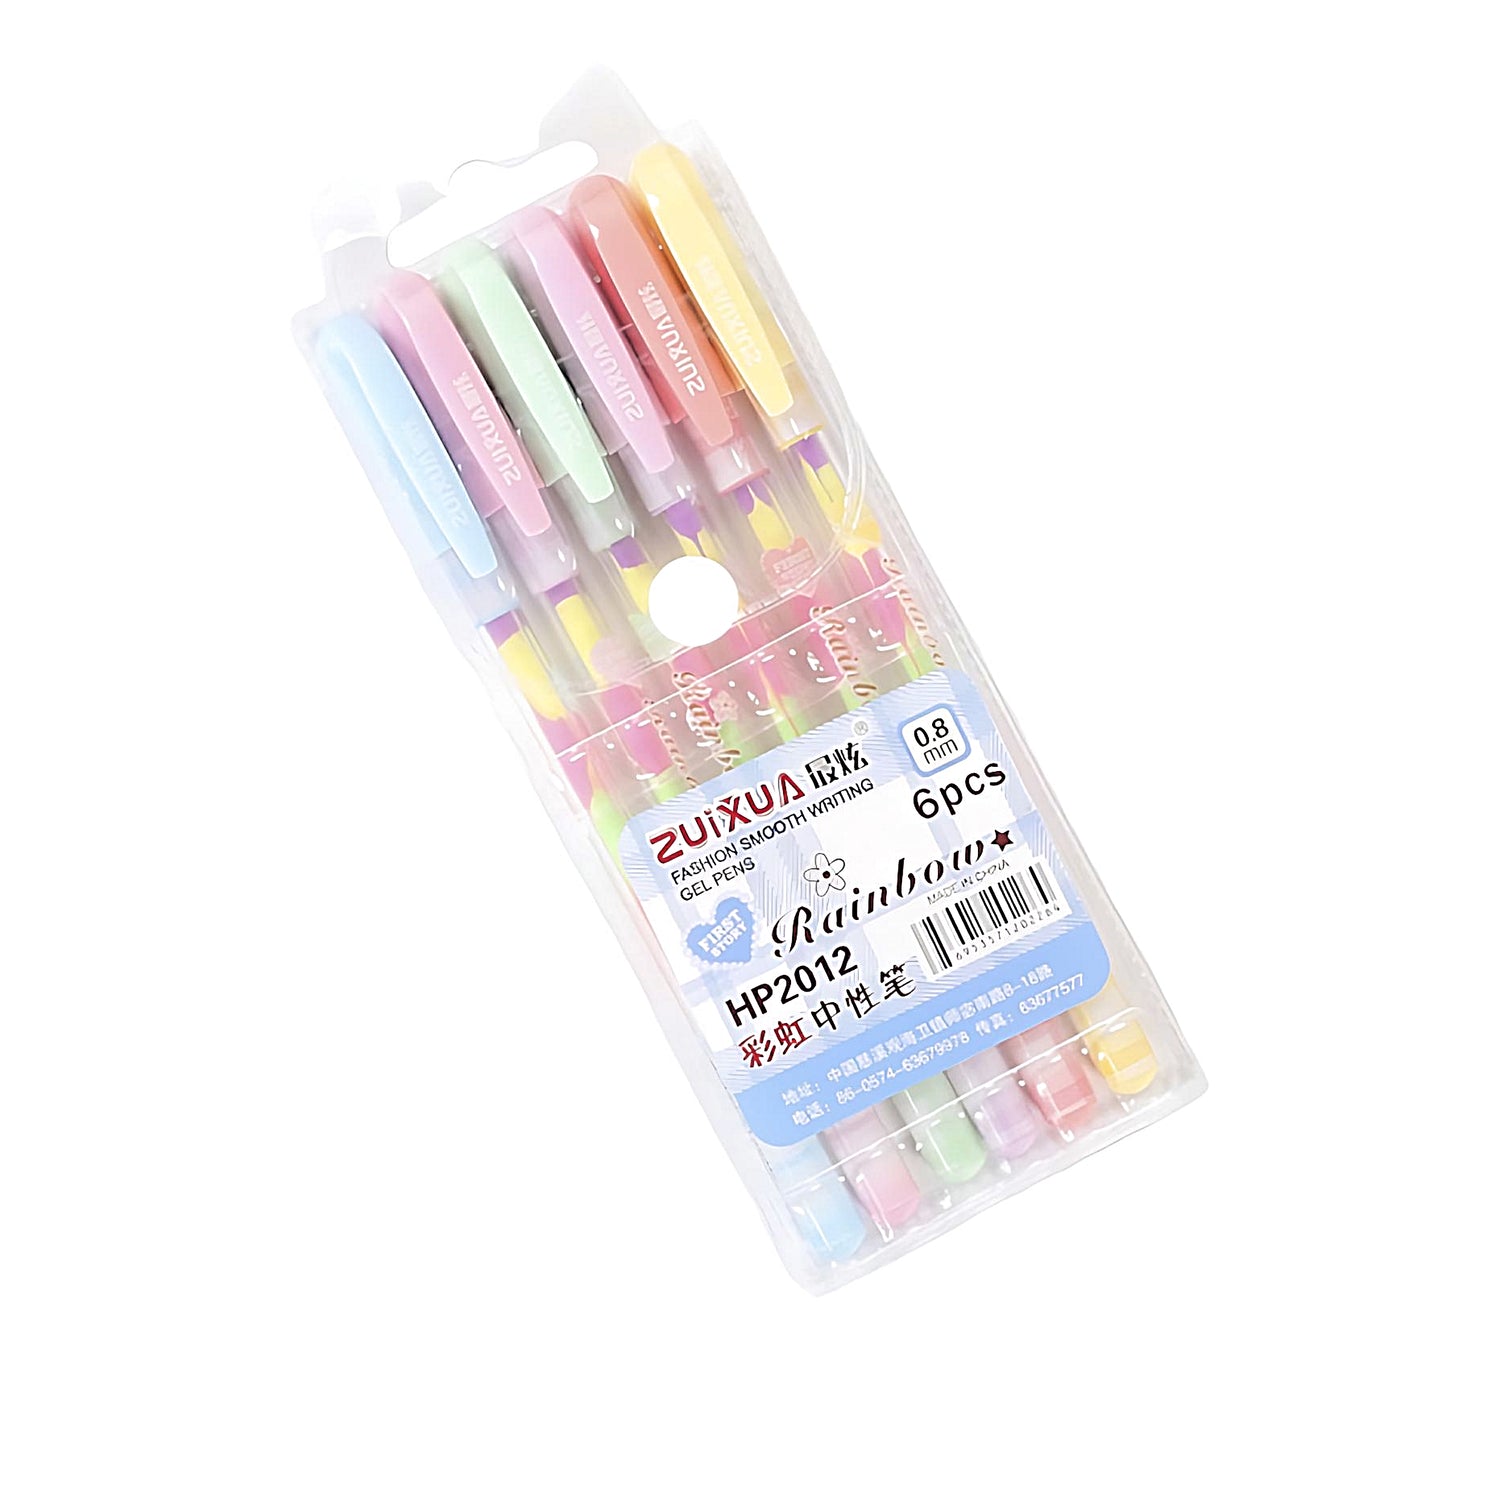 a Zuixua rainbow gel pen set on a white background